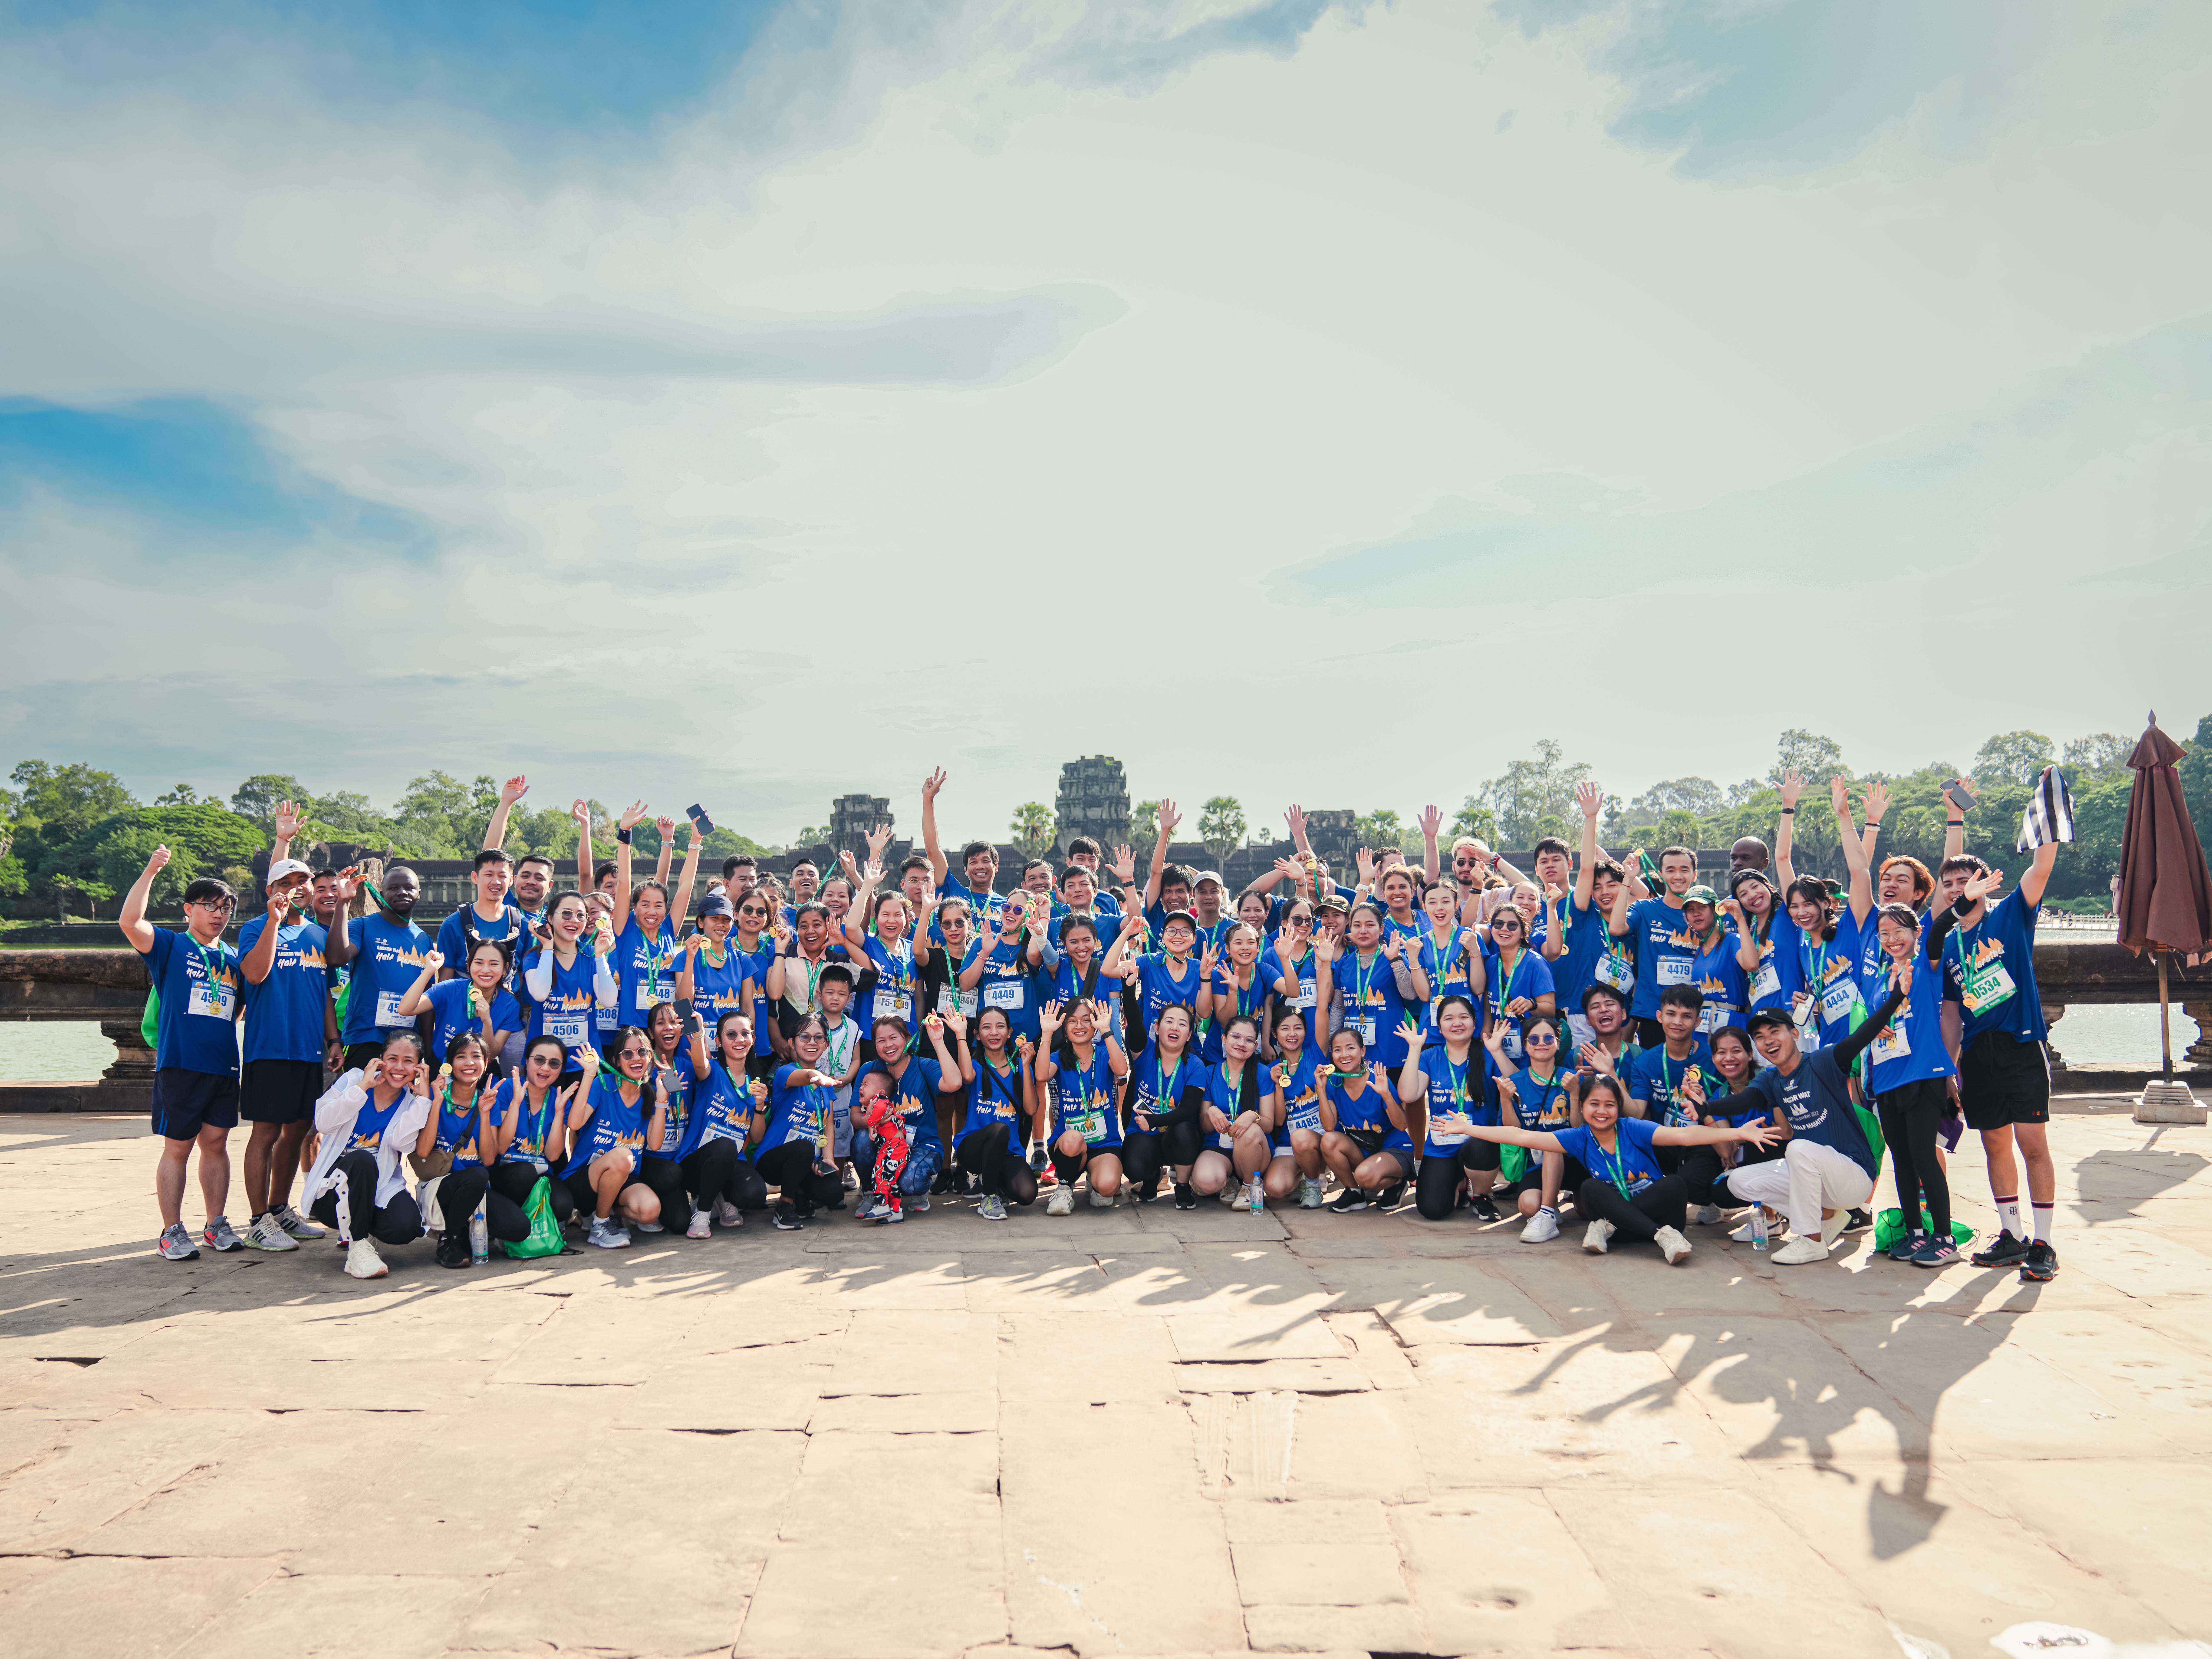 123 people from Institut Pasteur du Cambodge at the Angkor Wat International Half-Marathon